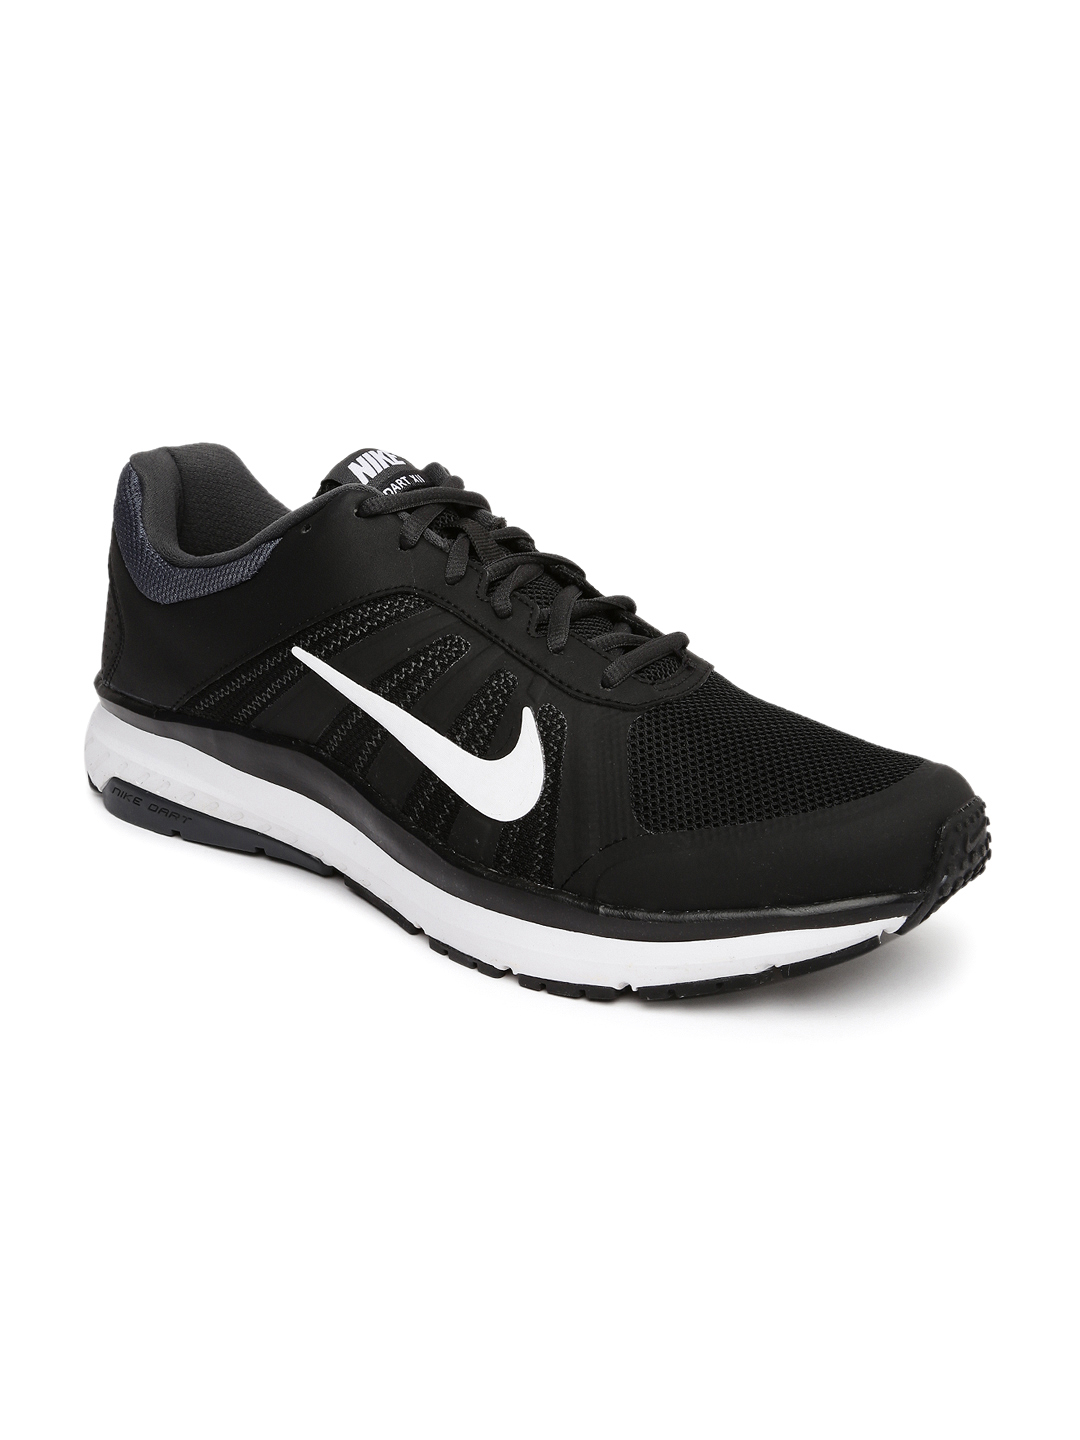 Buy NIKE Men'S Black Running Shoes Online @ ₹4795 from ShopClues